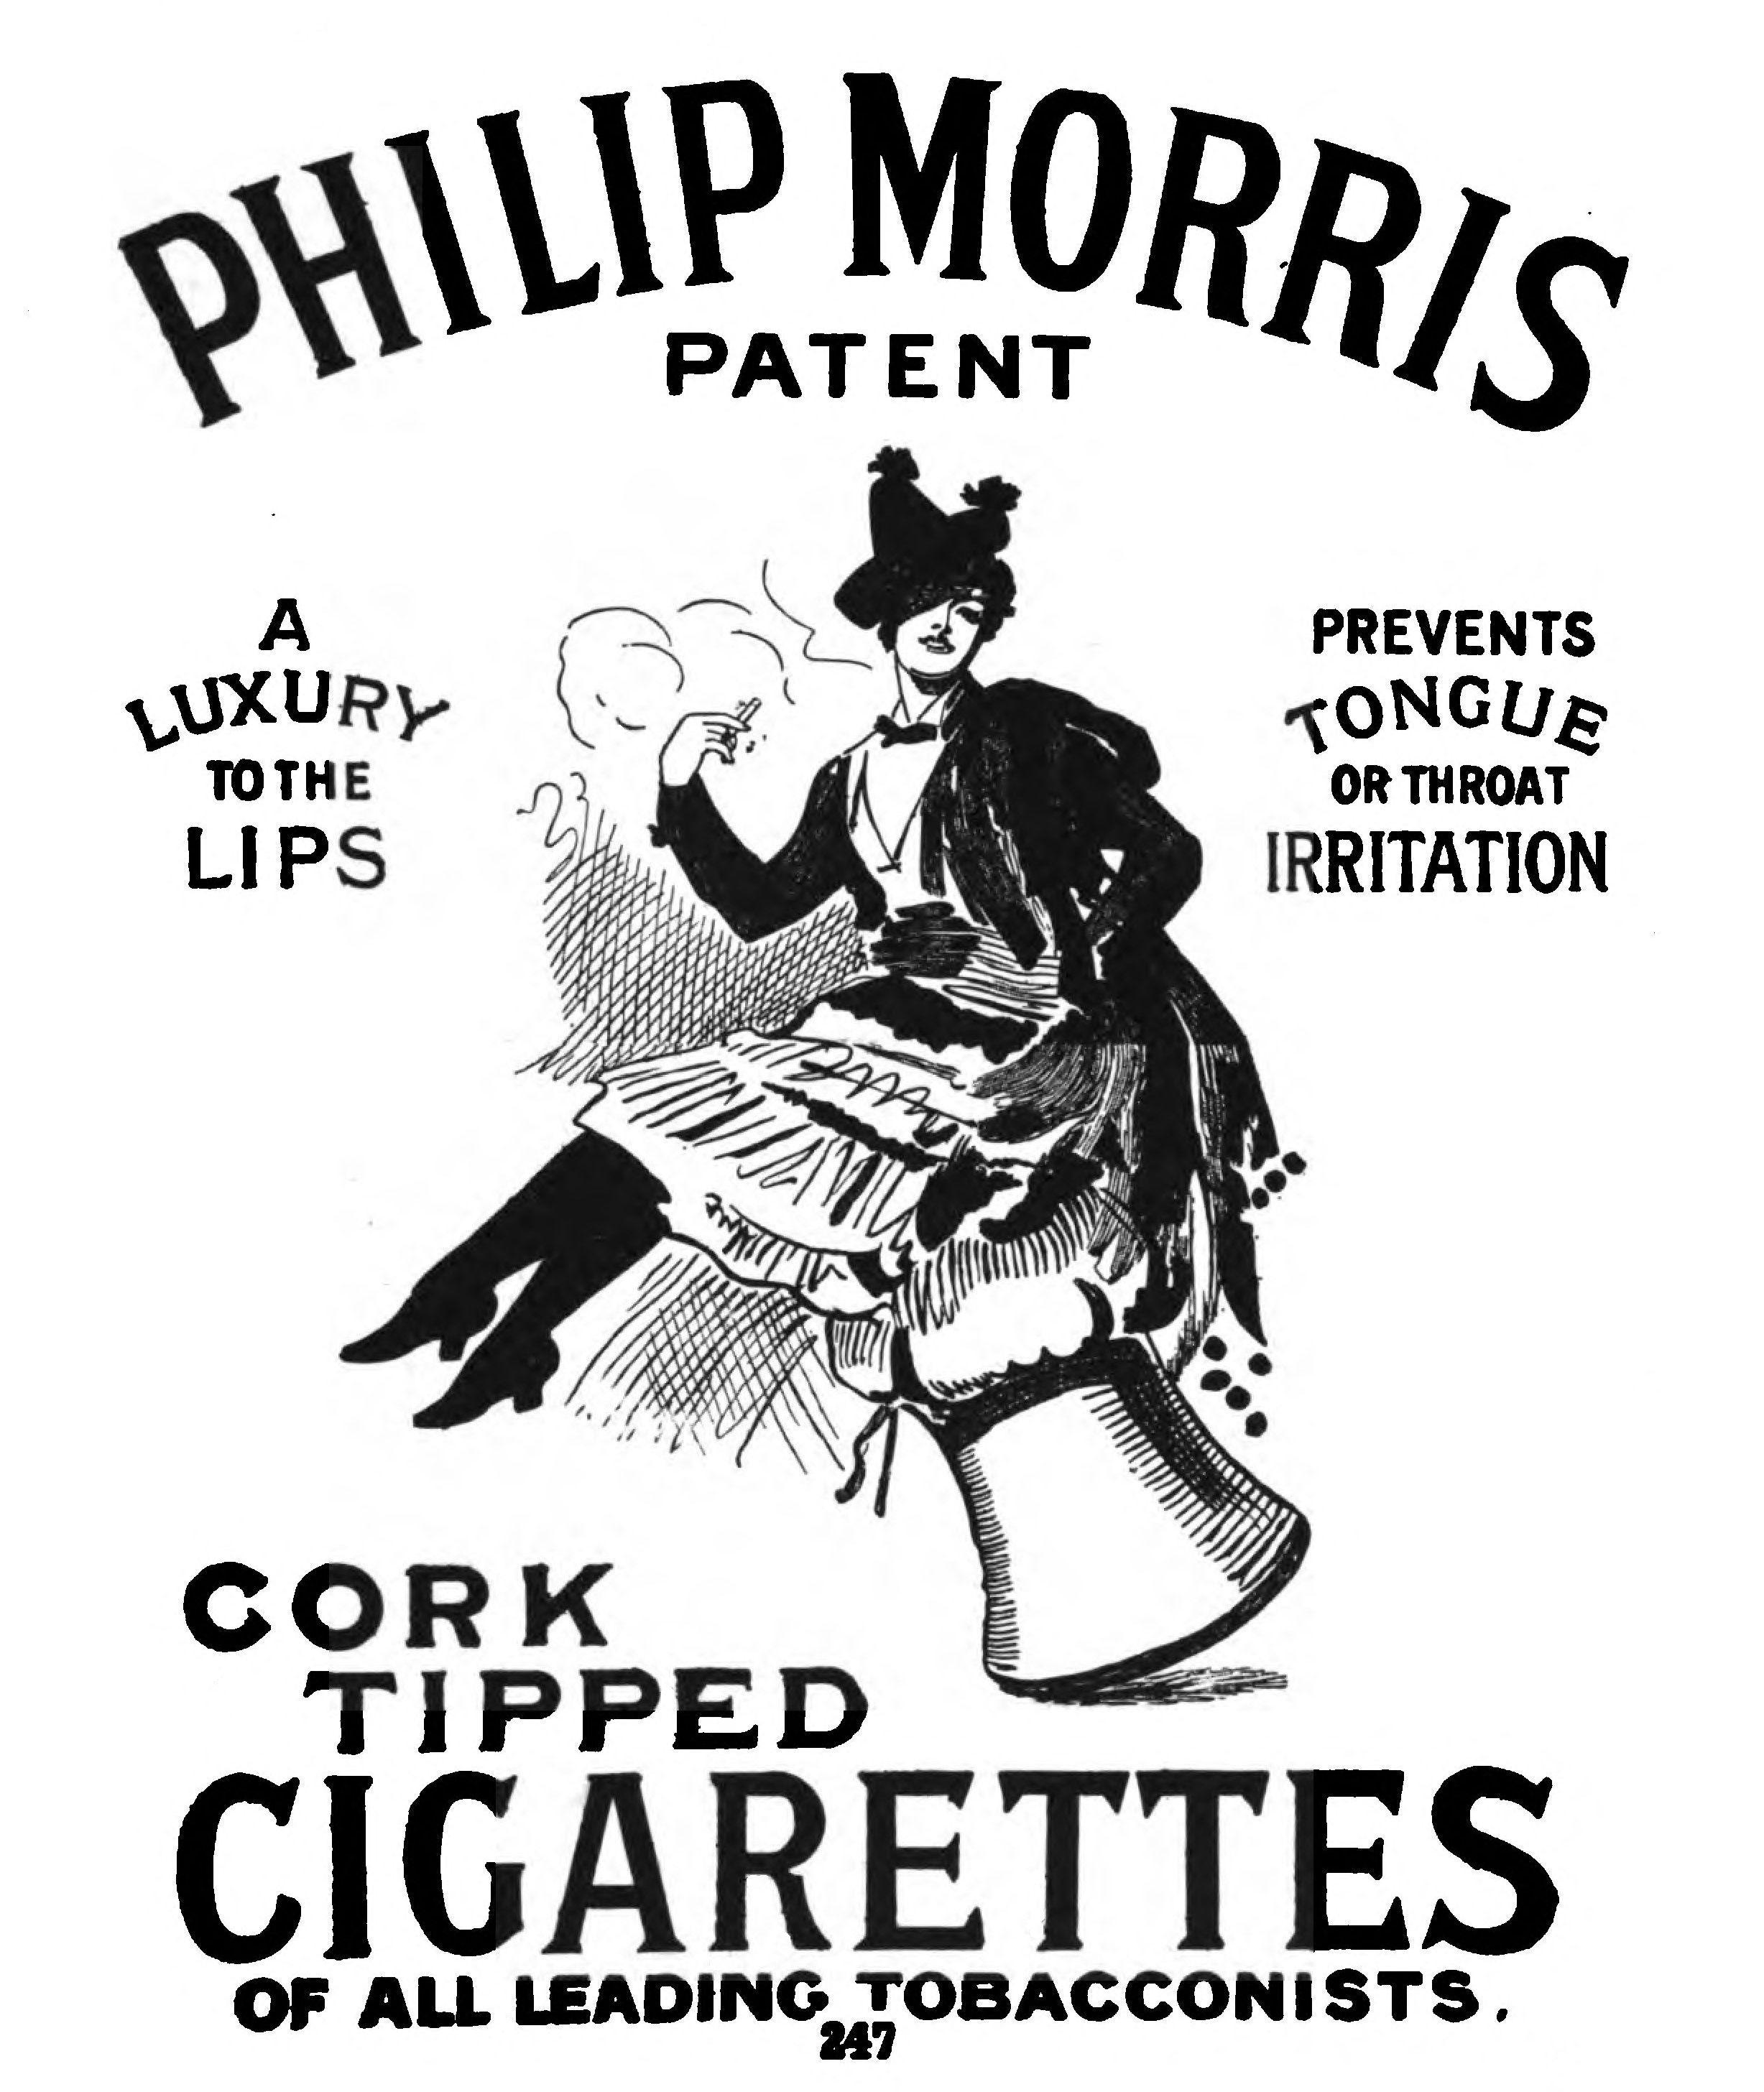 Philip Morris Tobacco Logo - PP D223 poster by linley sambourne for philip morris cigarettes